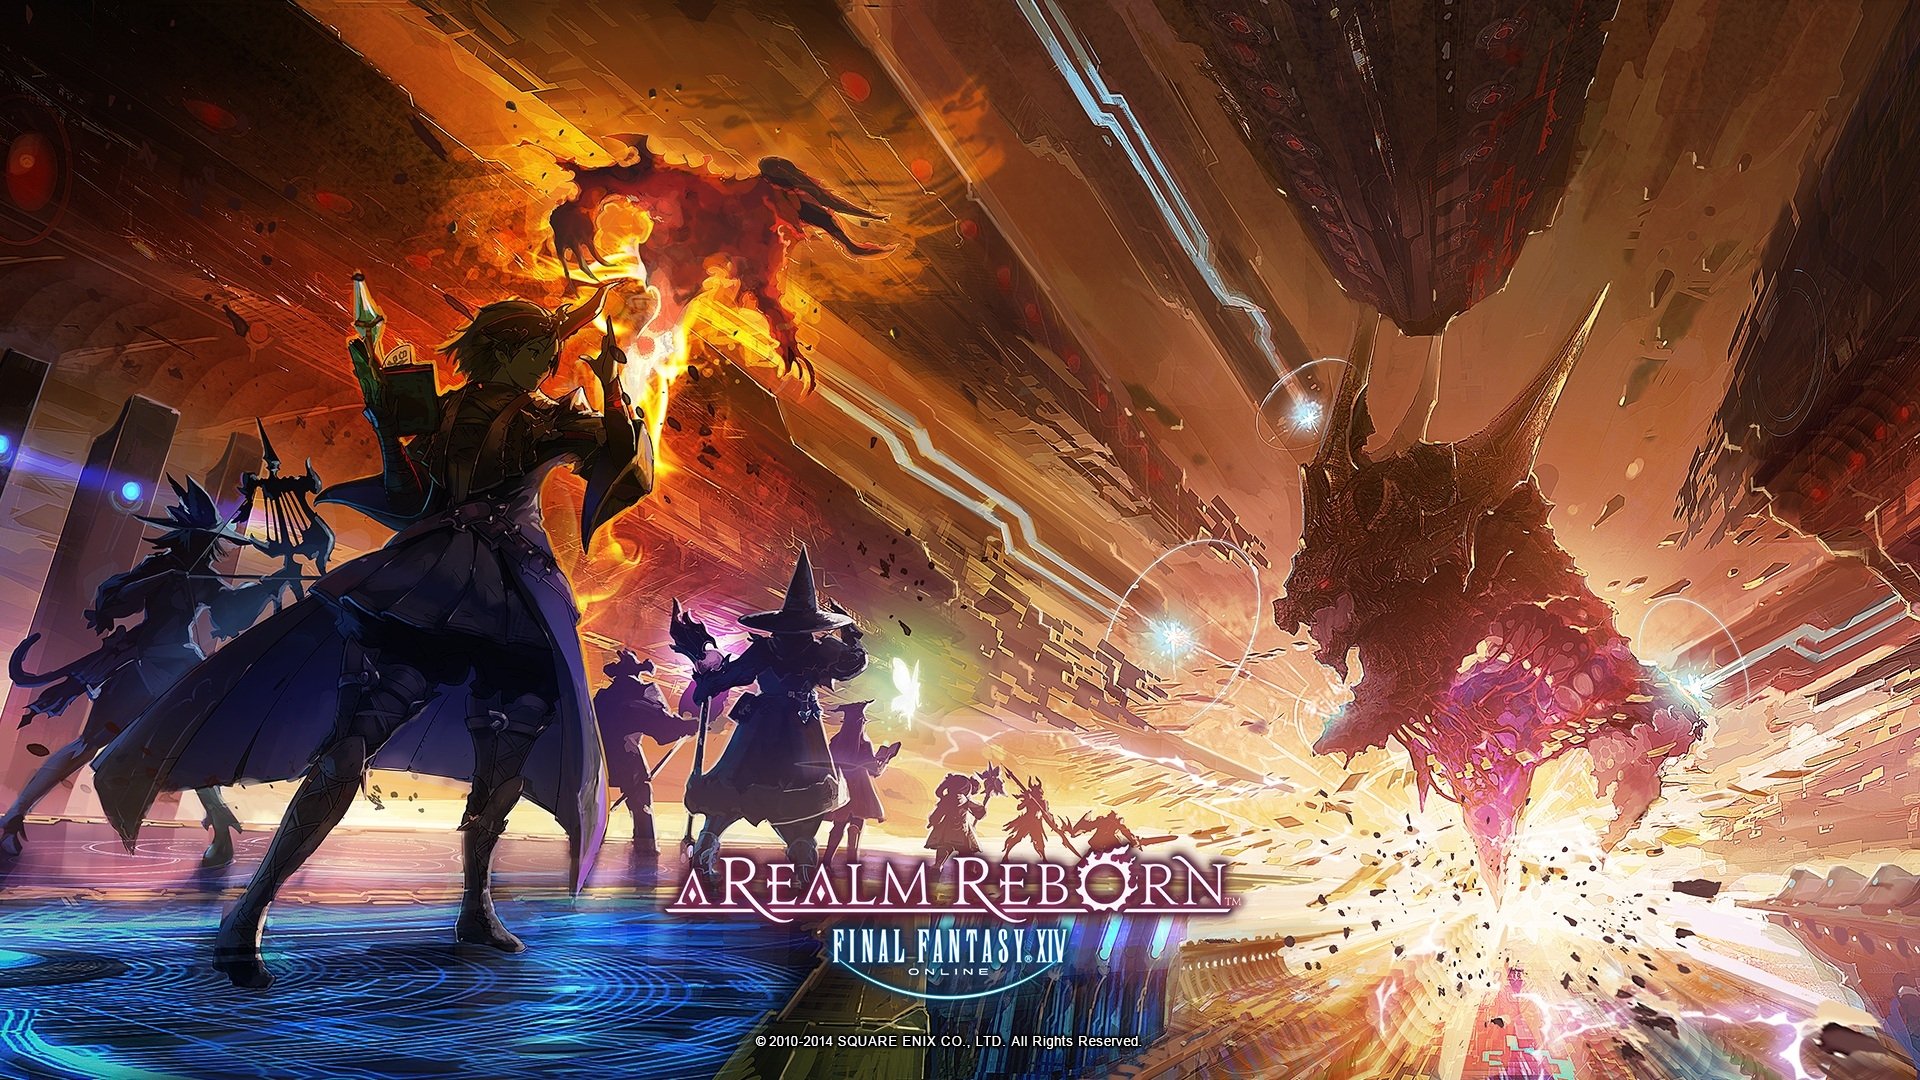 Final Fantasy Xiv A Realm Reborn Hd Wallpaper Background Image 1920x1080 Id 1001876 Wallpaper Abyss